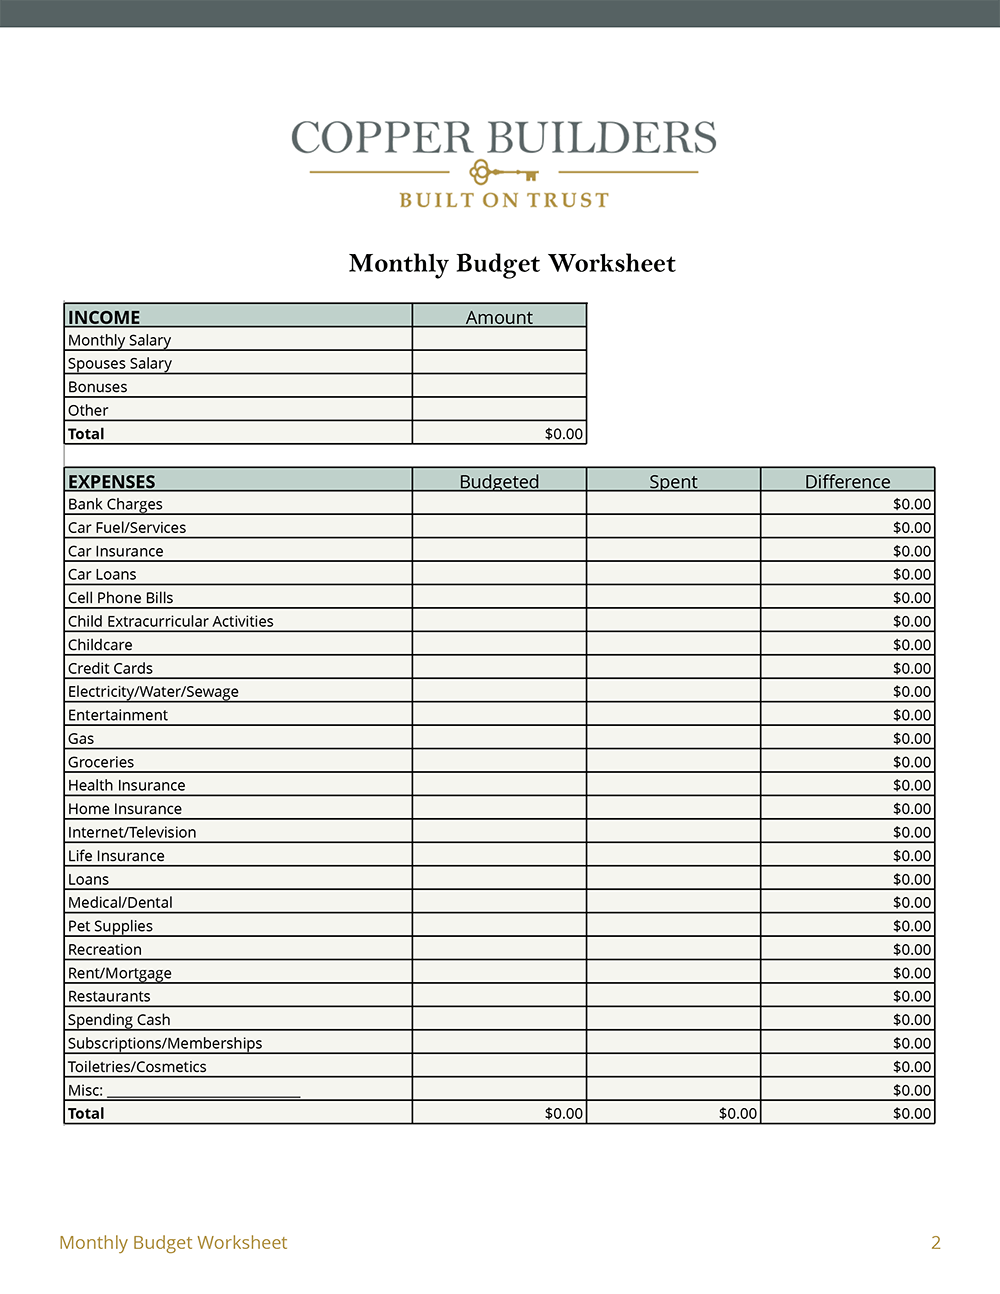 cop-monthly-budget-worksheet-1